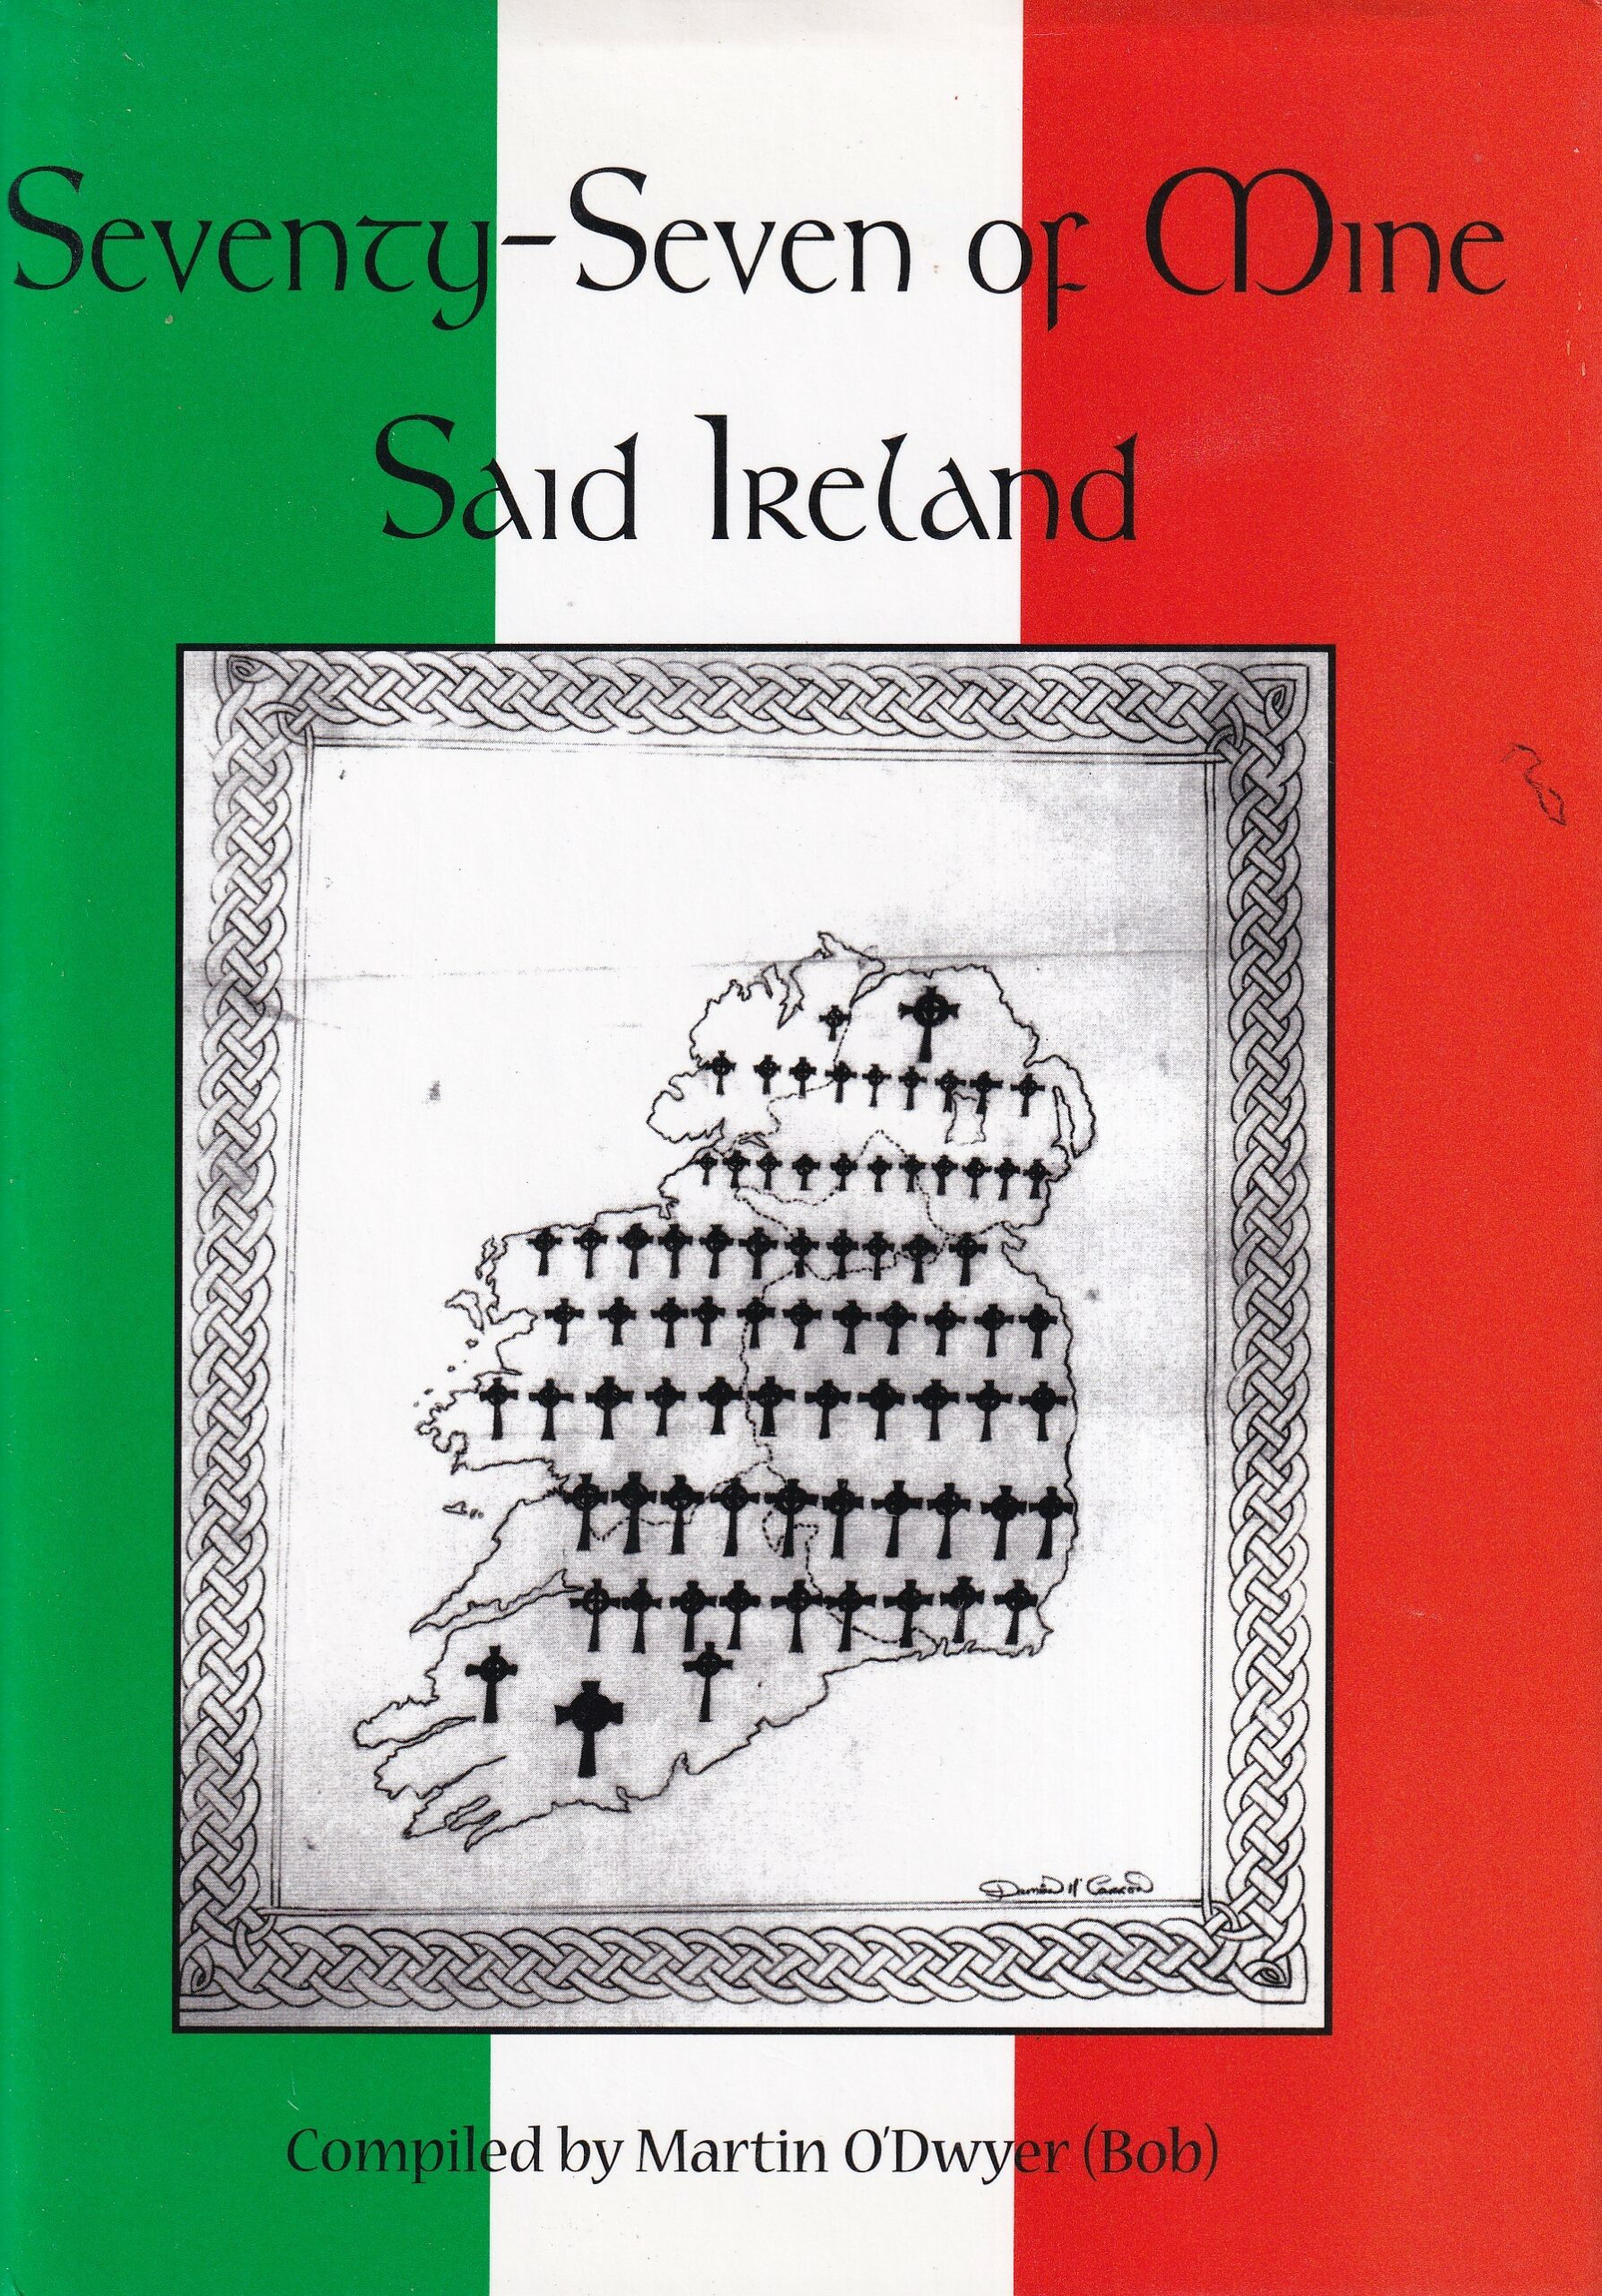 Seventy-Seven of Mine Said Ireland- Signed | Martin O'Dwyer | Charlie Byrne's